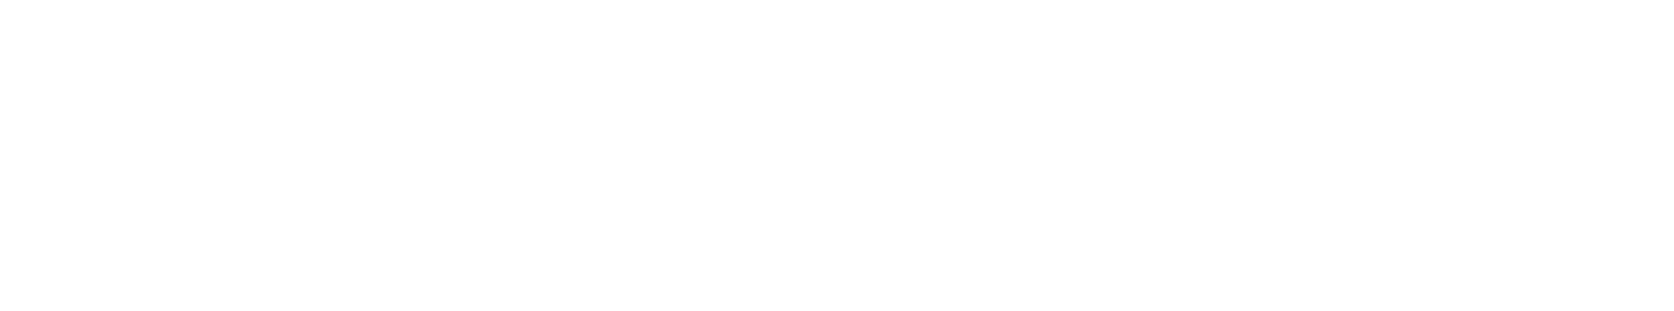 PRINCE & PRINCESS OF WALES